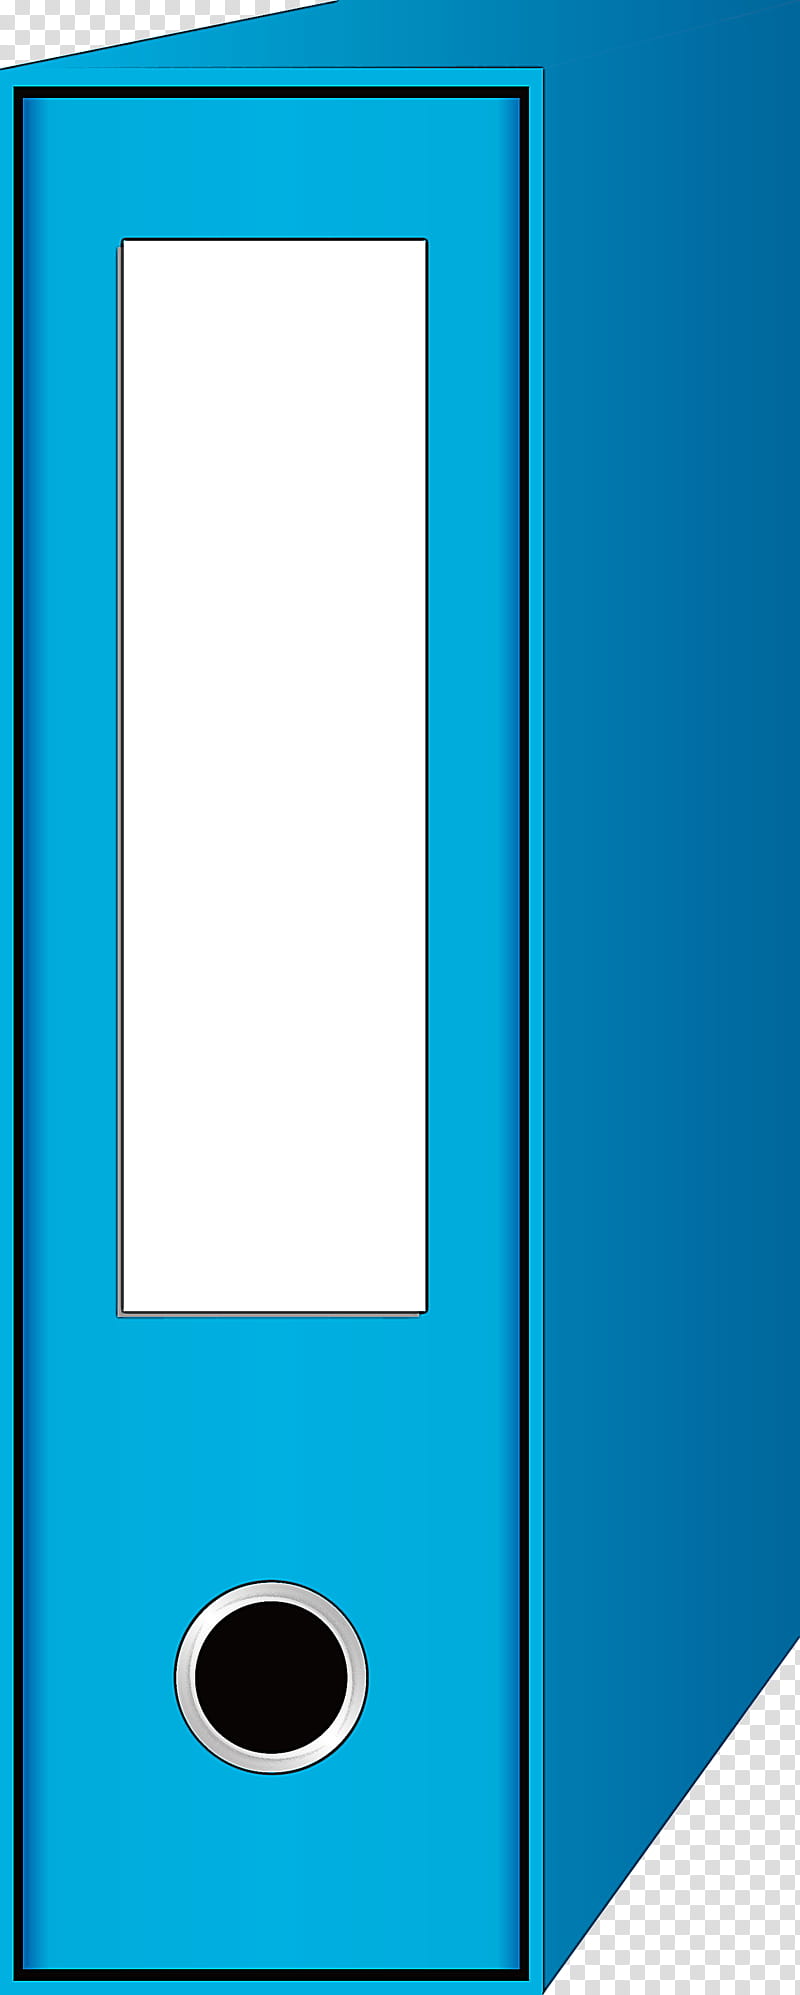 file folder School Supplies, Blue, Turquoise, Aqua, Teal, Azure, Electric Blue, Rectangle transparent background PNG clipart